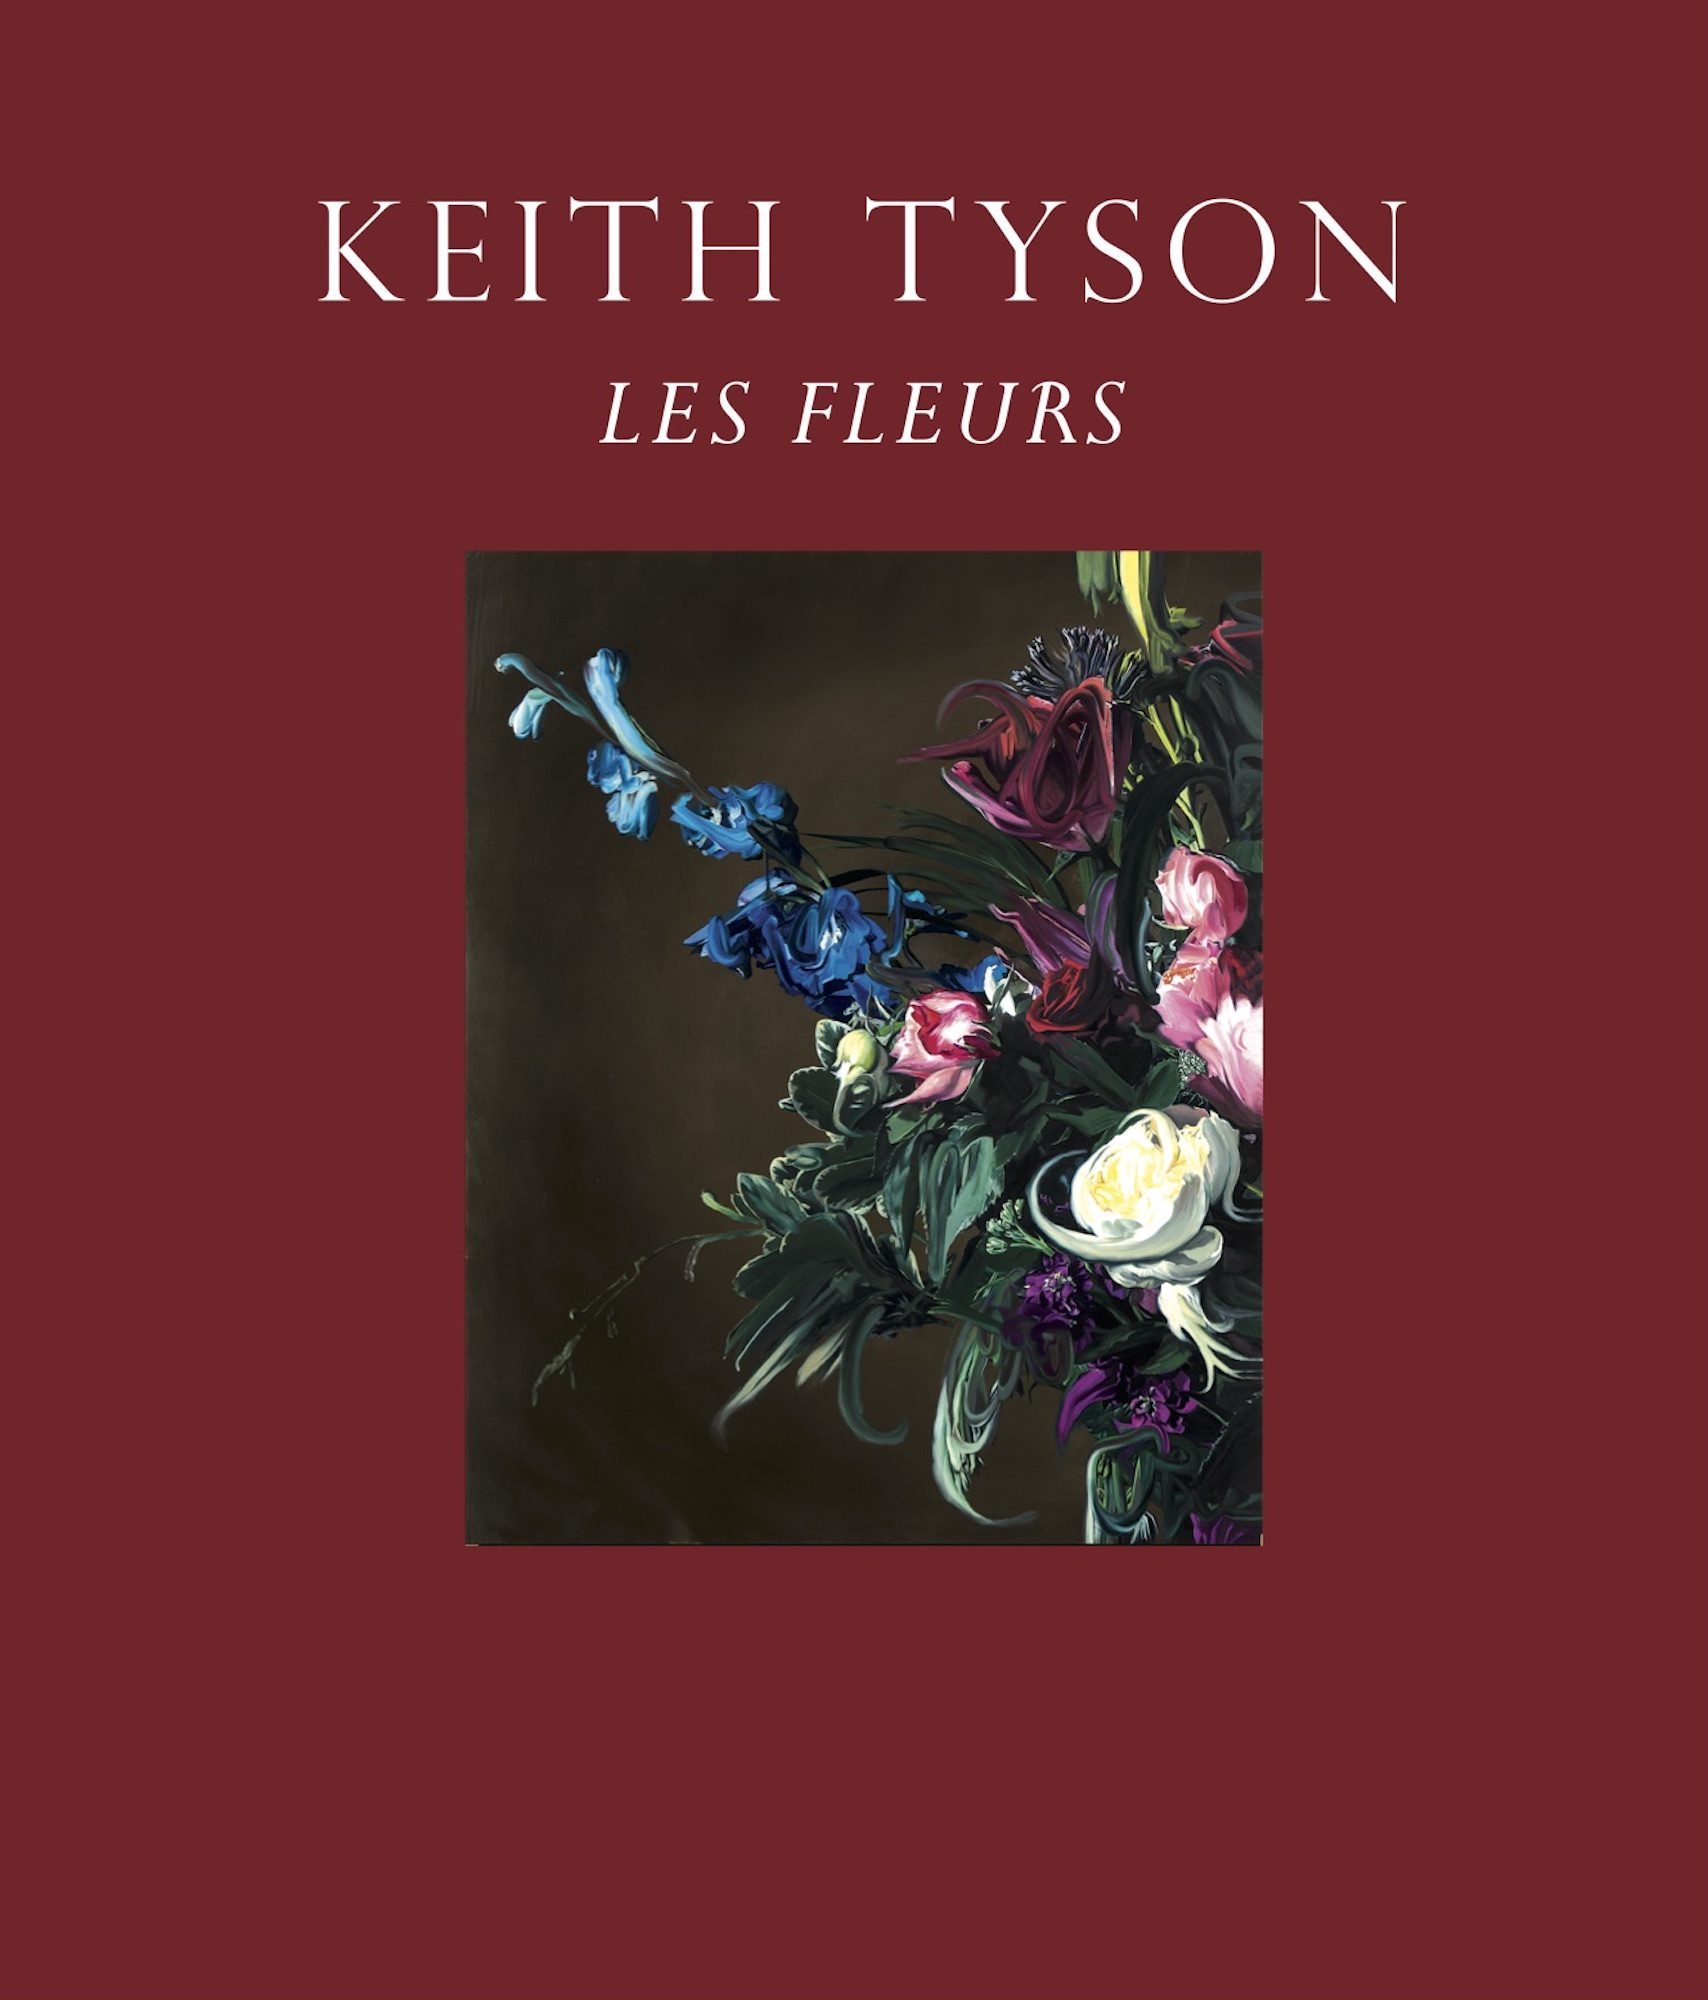 Keith Tyson, Les fleurs - Galerie Georges-Philippe & Nathalie Vallois